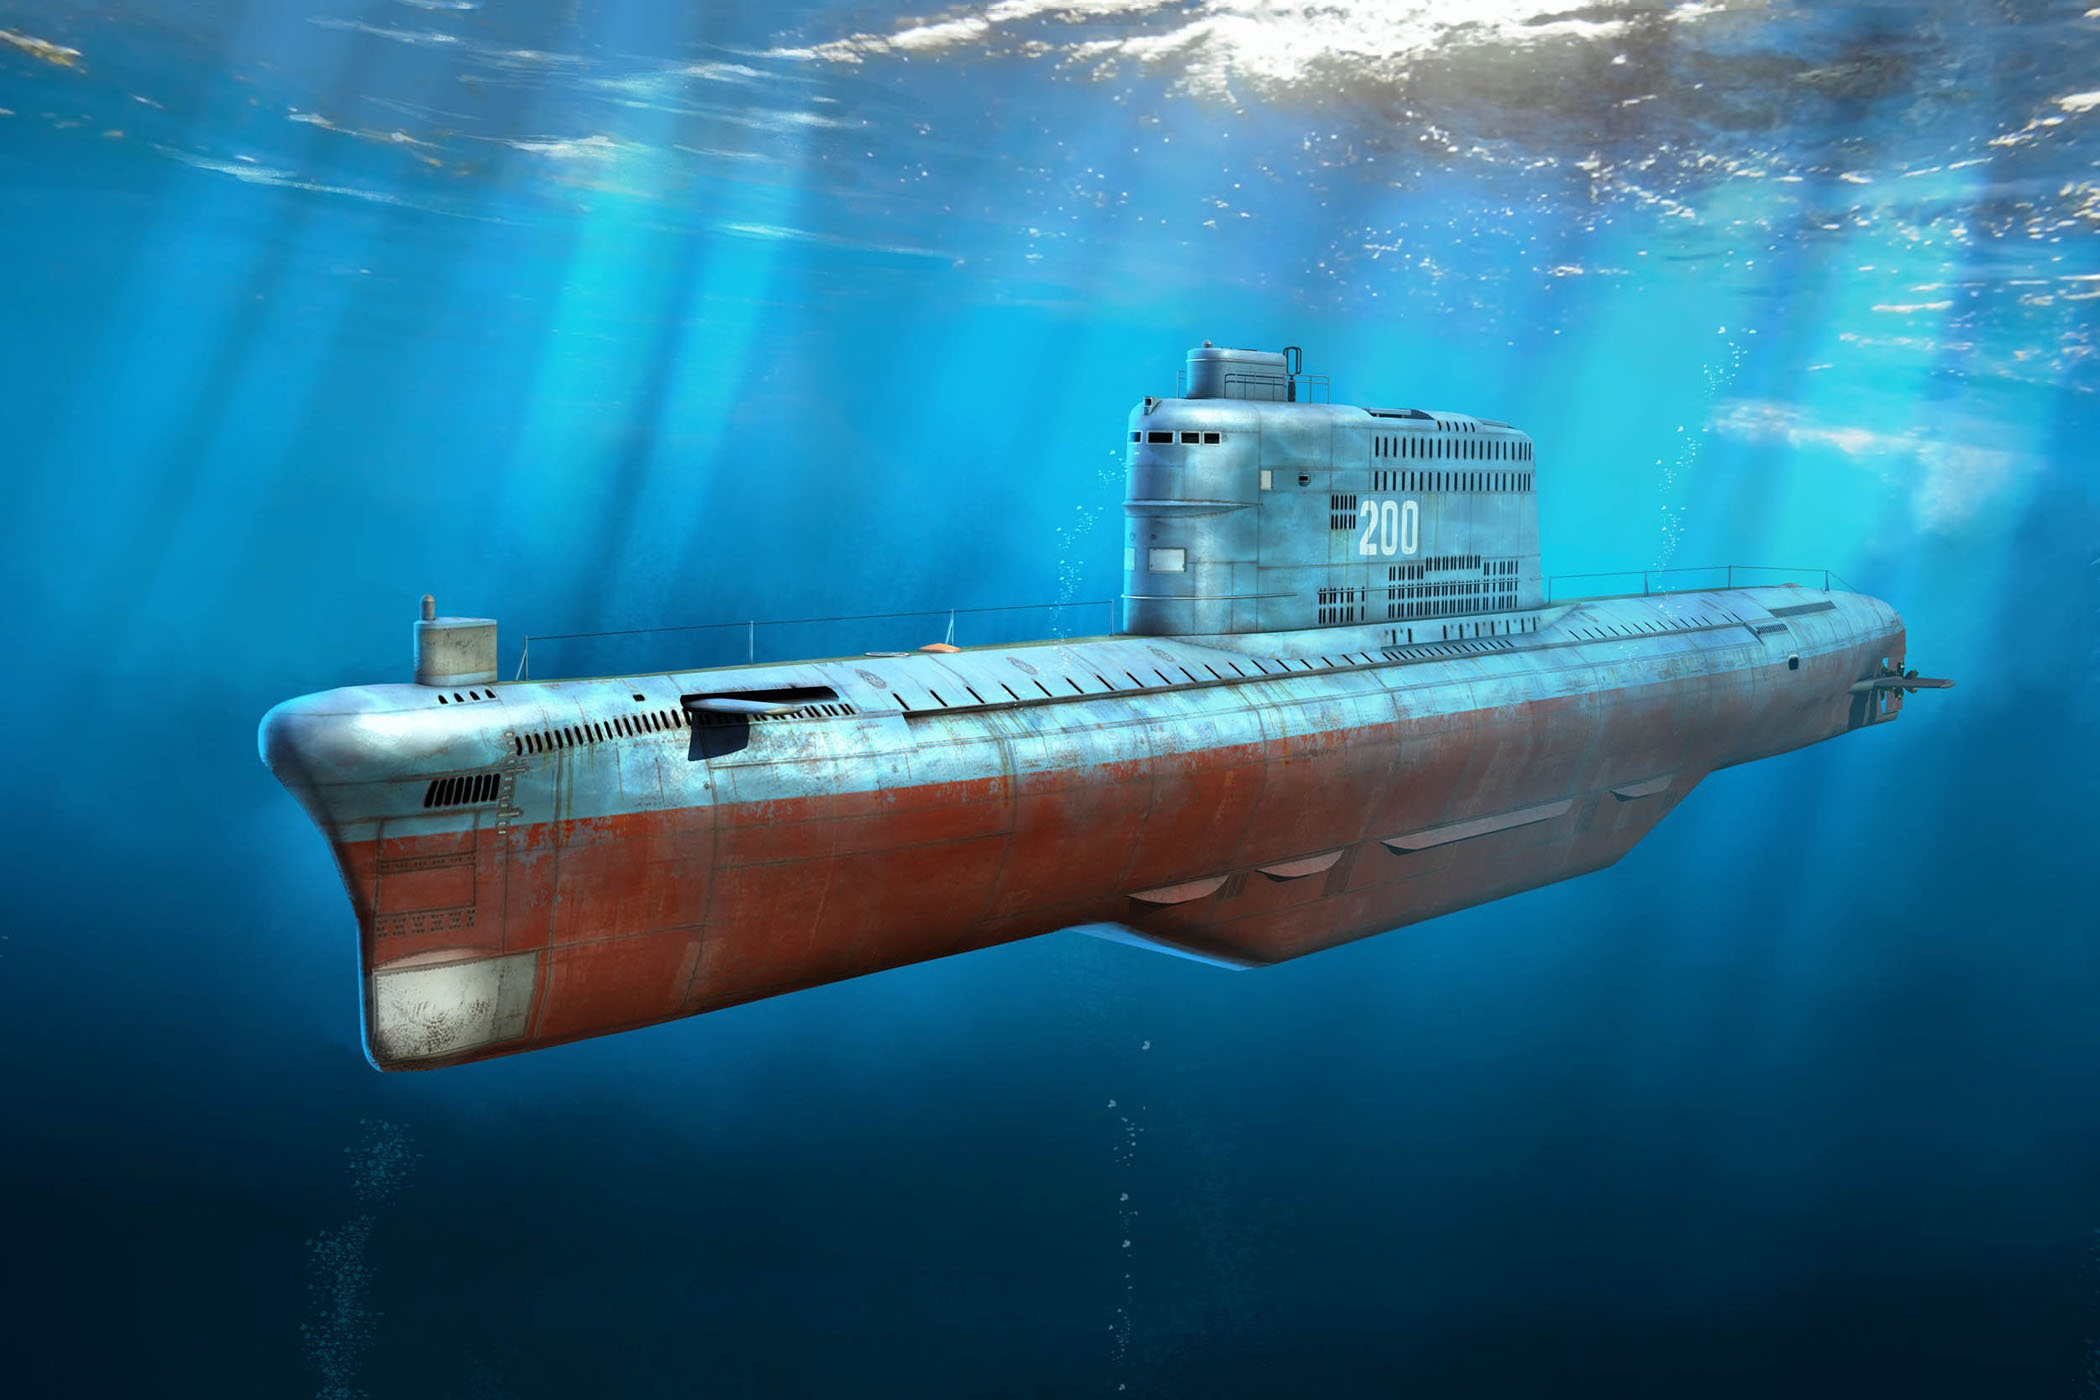 2100x1400 Wallpaper : artwork, military, underwater, vehicle, submarine WallpaperManiac 1752725 HD Wallpapers